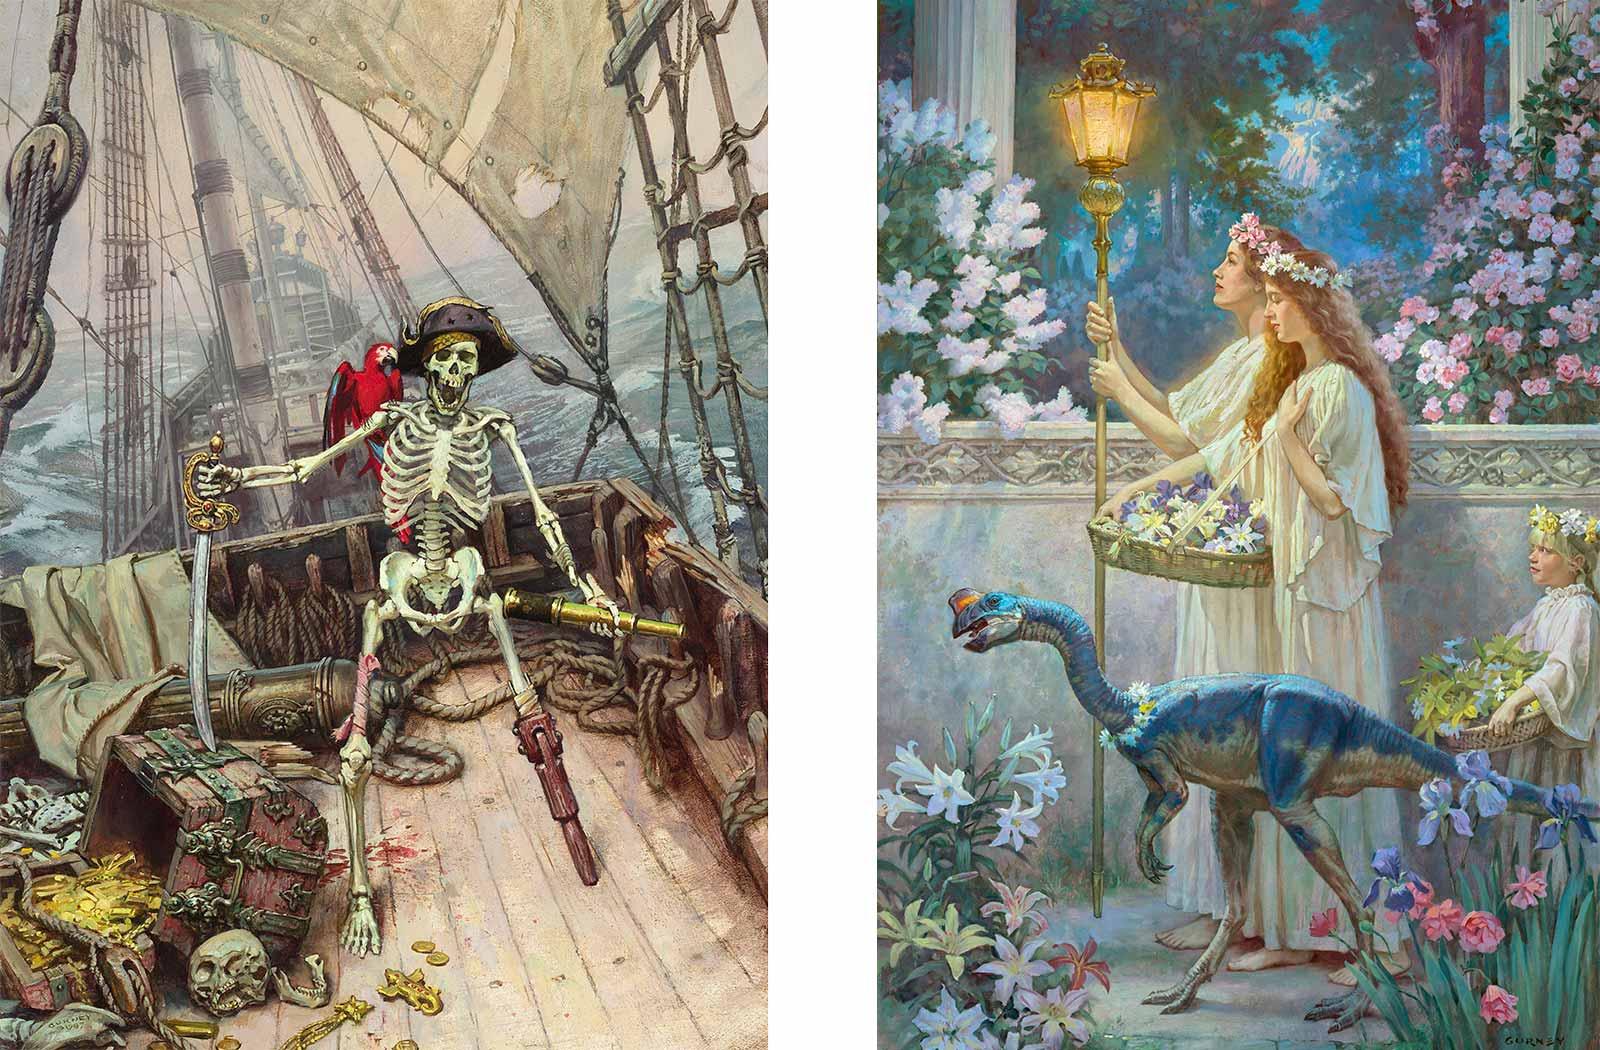 James Gurney, Skeleton Pirate (left) and Garden of Hope (right)